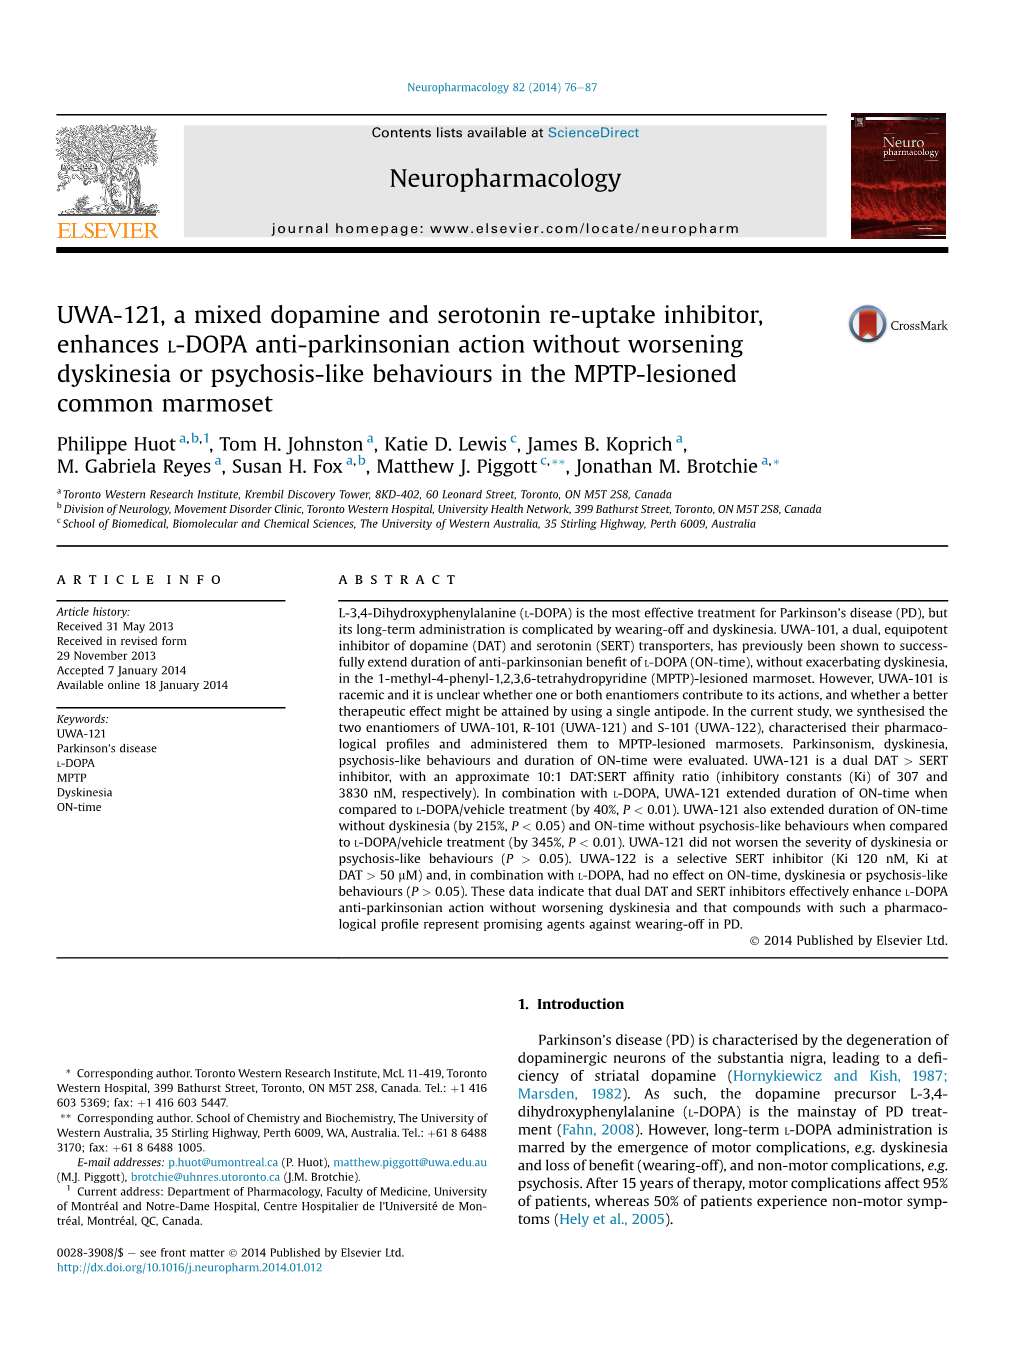 UWA-121, a Mixed Dopamine and Serotonin Re-Uptake Inhibitor, Enhances L-DOPA Anti-Parkinsonian Action Without Worsening Dyskines